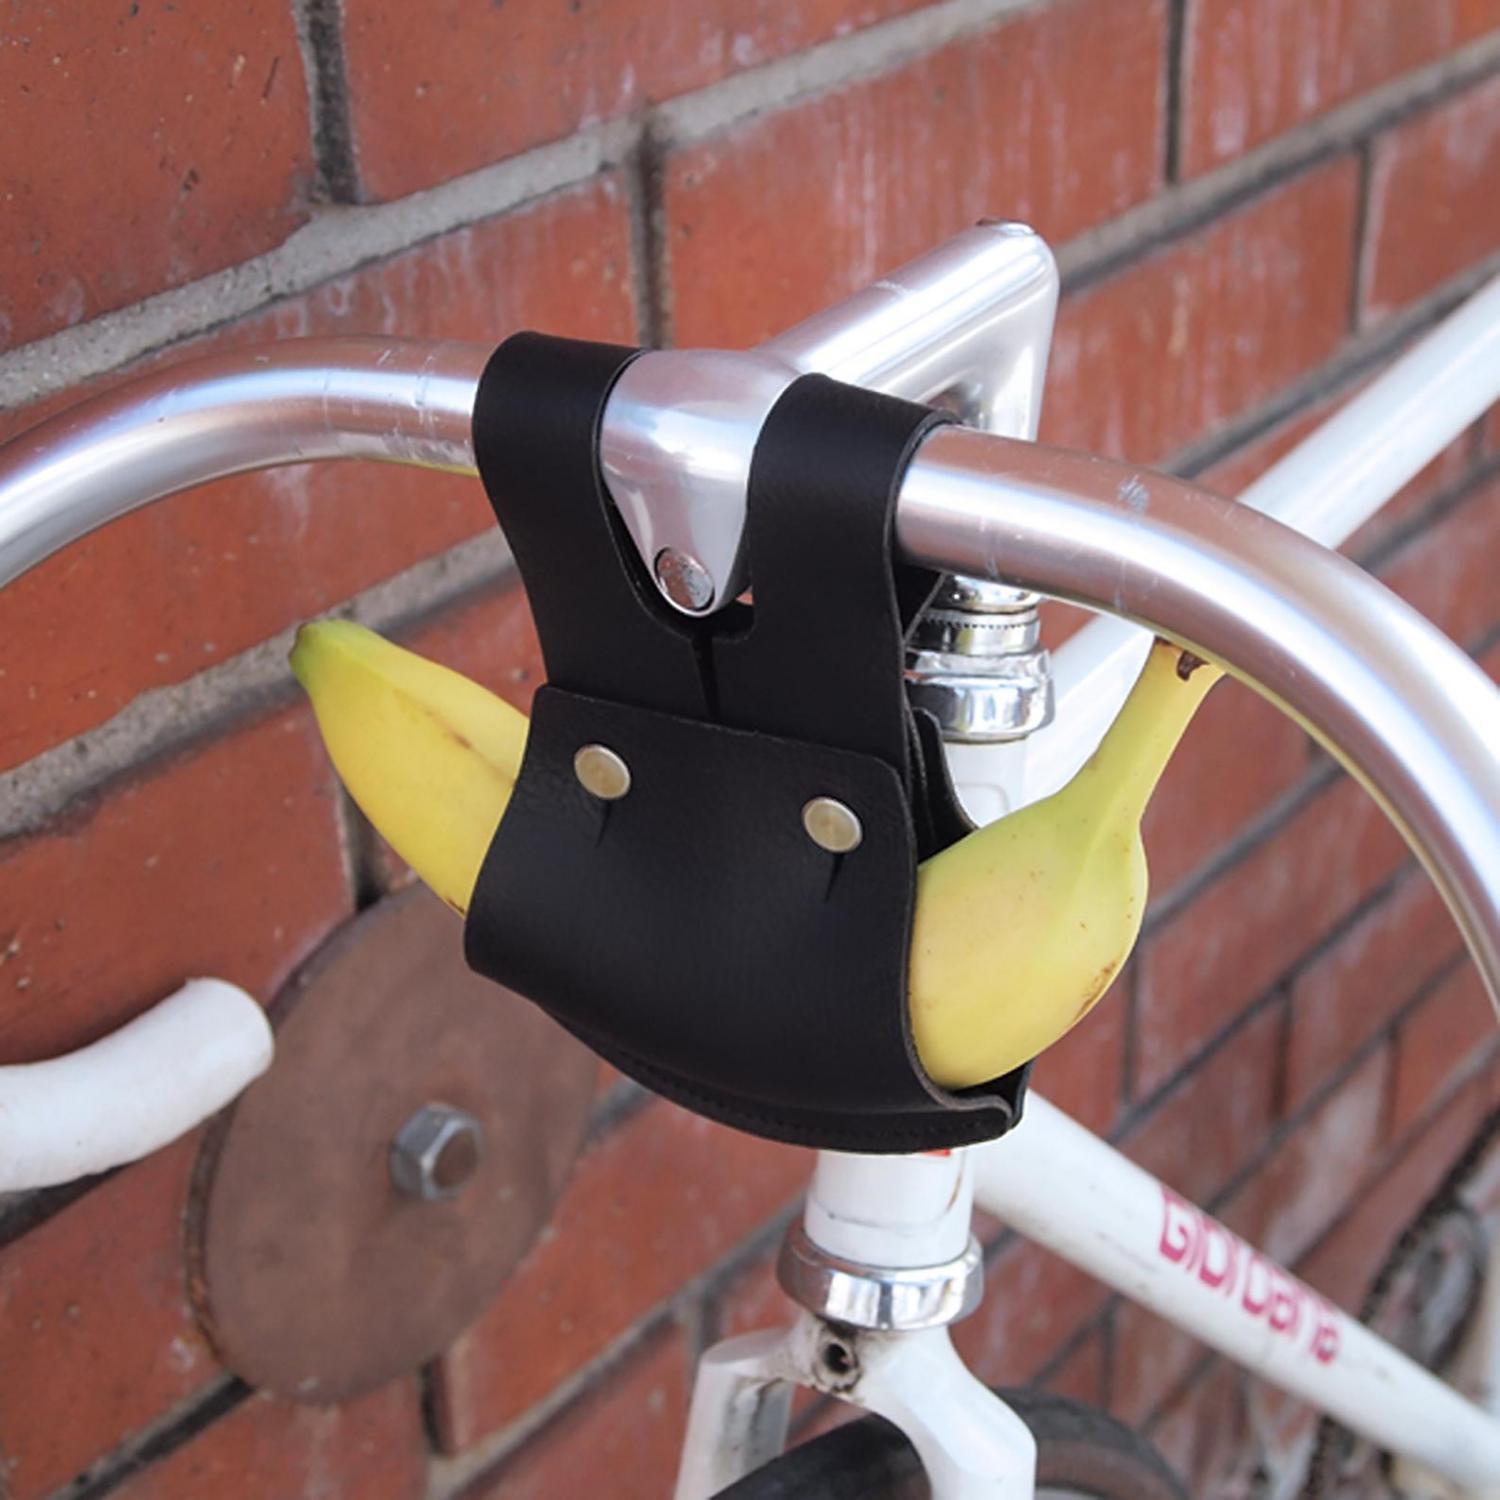 Banana Holder For Your Bicycle - Leather bike banana holster